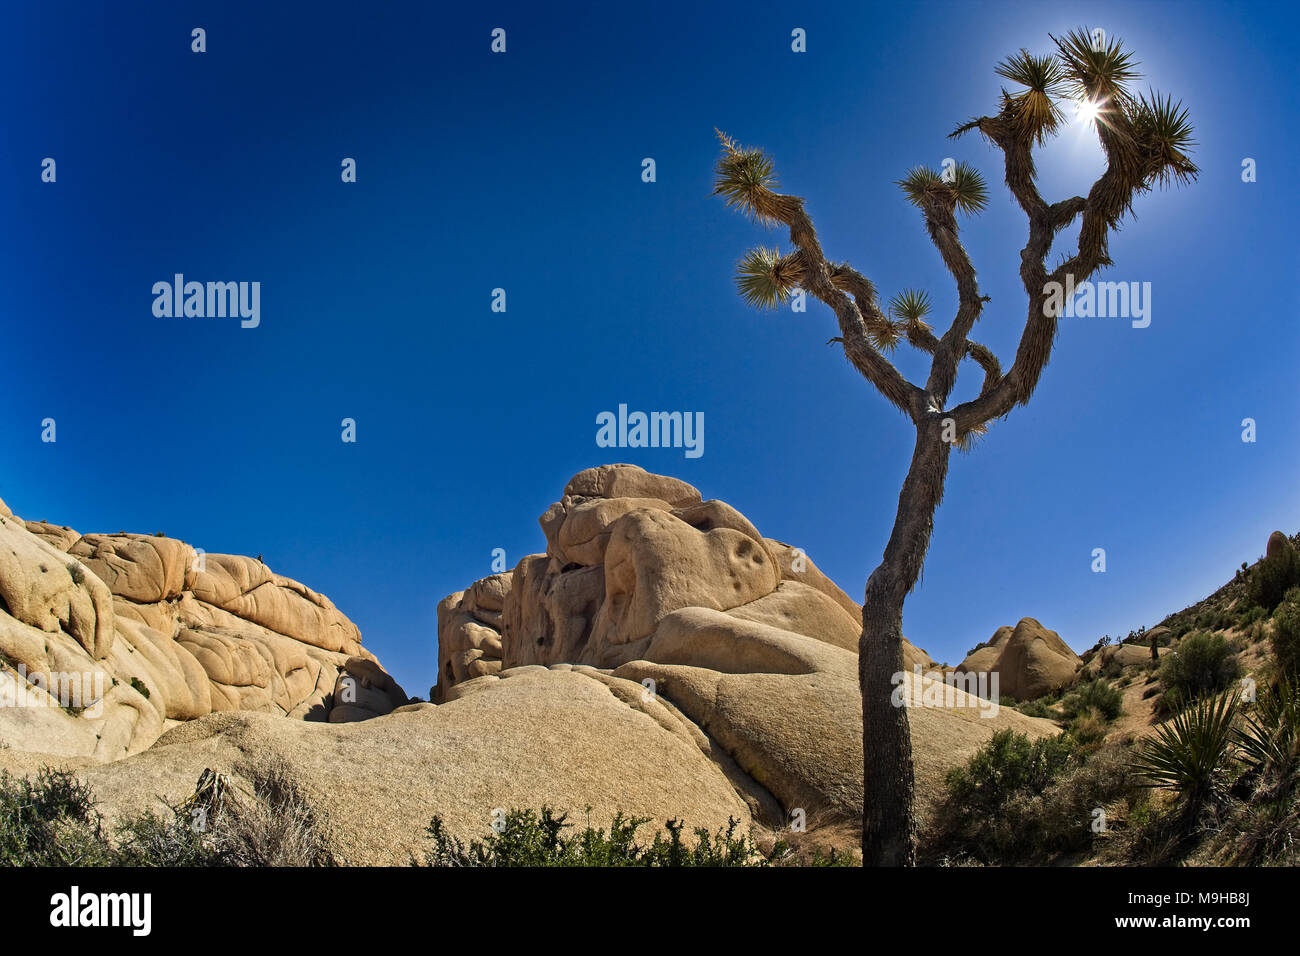 Single Joshua tree next to rock formations in Joshua Tree National Park in Southern California's Mojave Desert Stock Photo